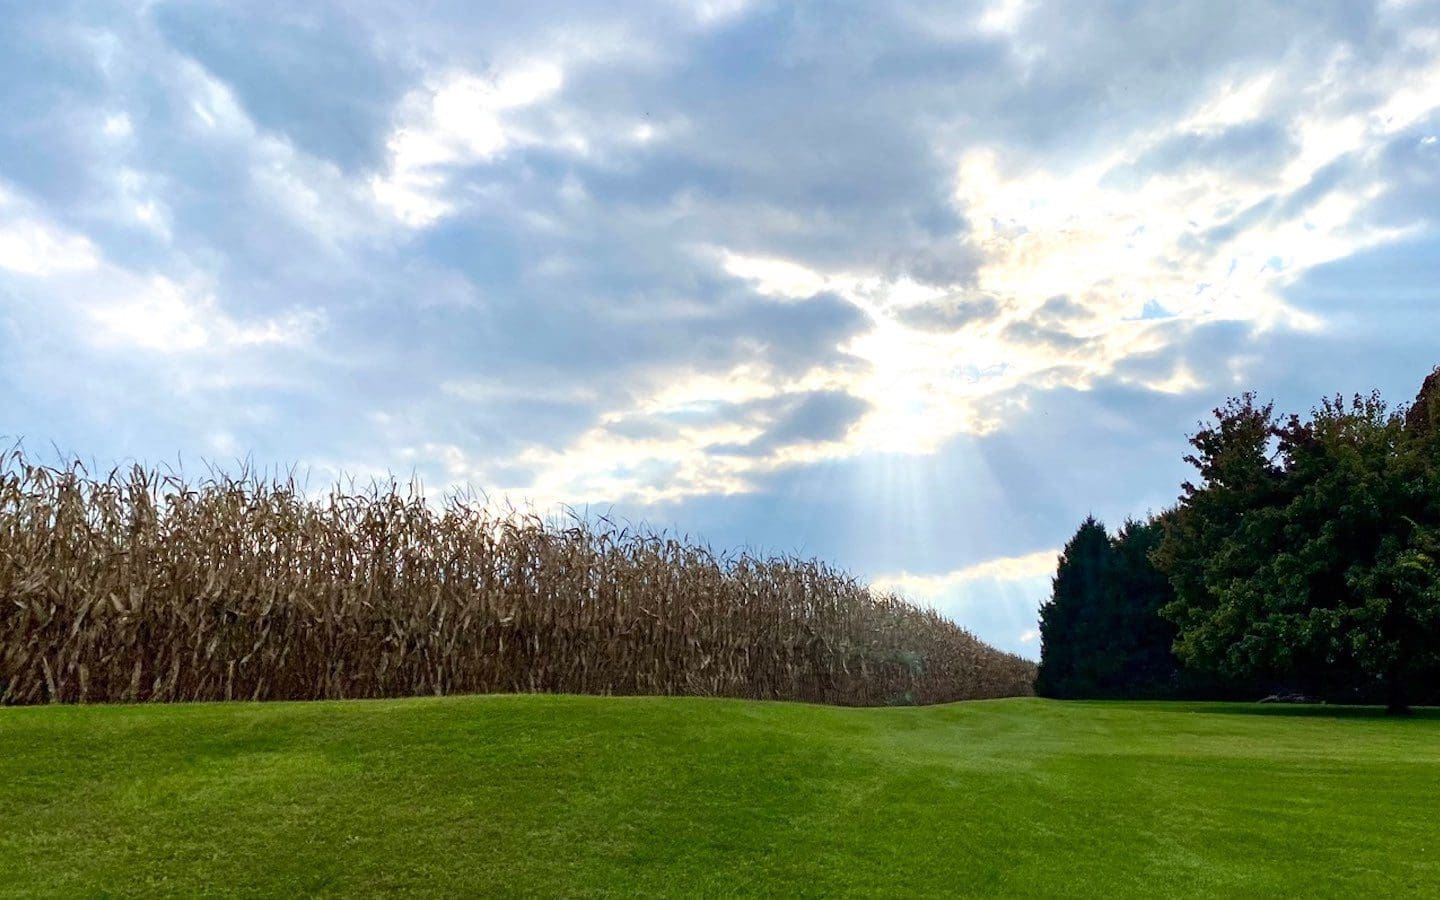 Dry corn awaiting harvest in Pennsylvania.